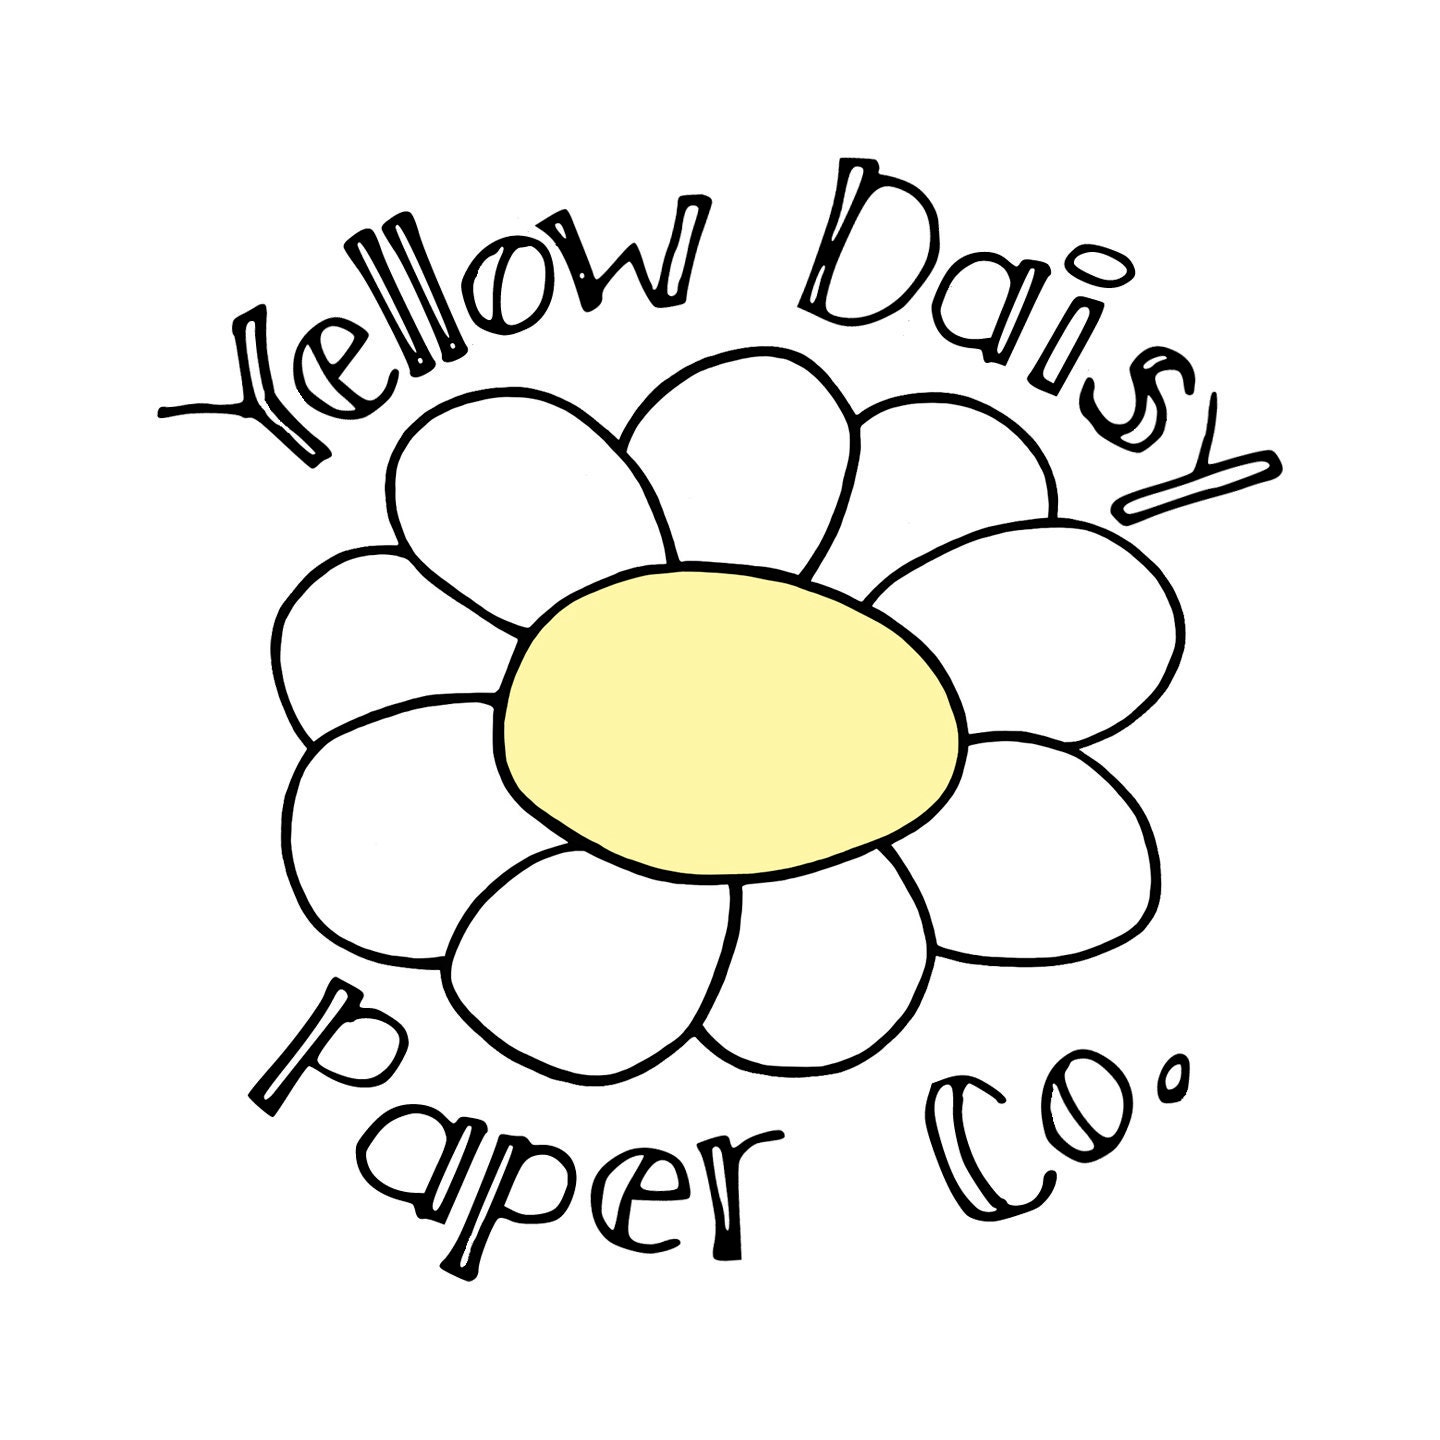 Tree Hugger Stickers, Vinyl Stickers, Nature Sticker – Yellow Daisy Paper  Company